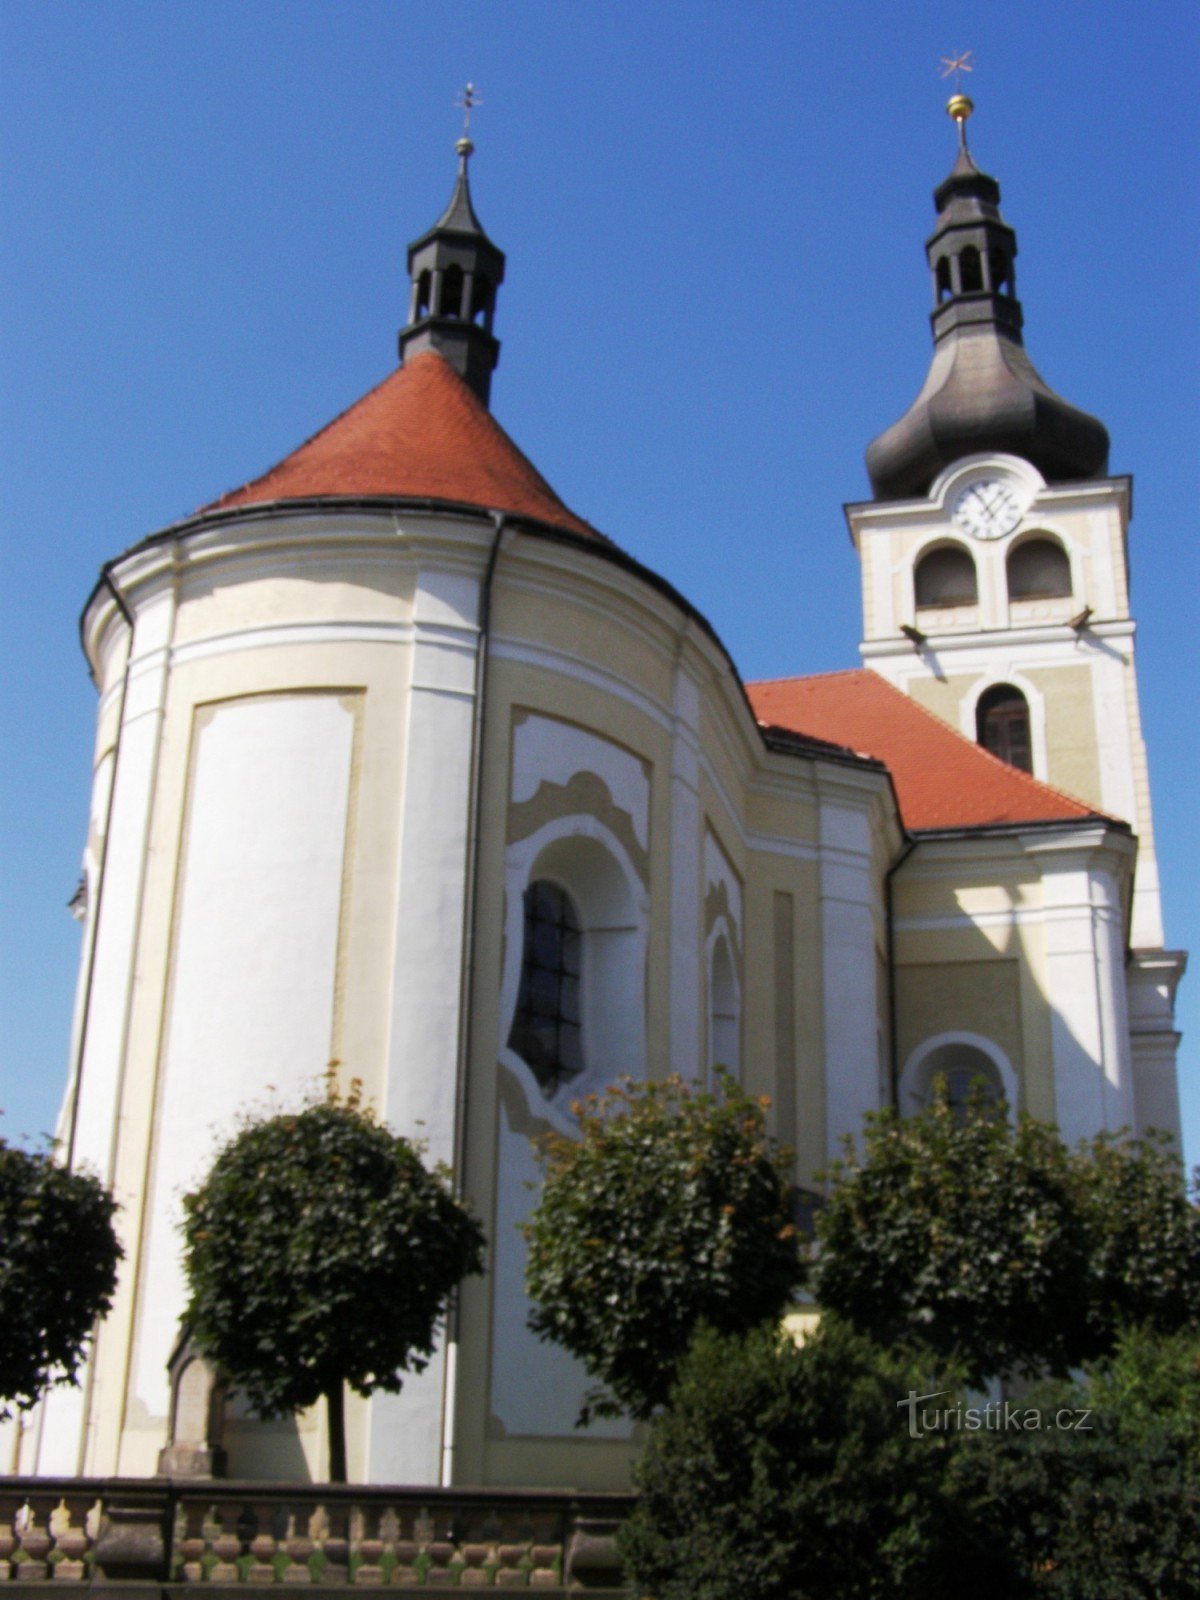 Hořice - Church of the Nativity of the Virgin Mary